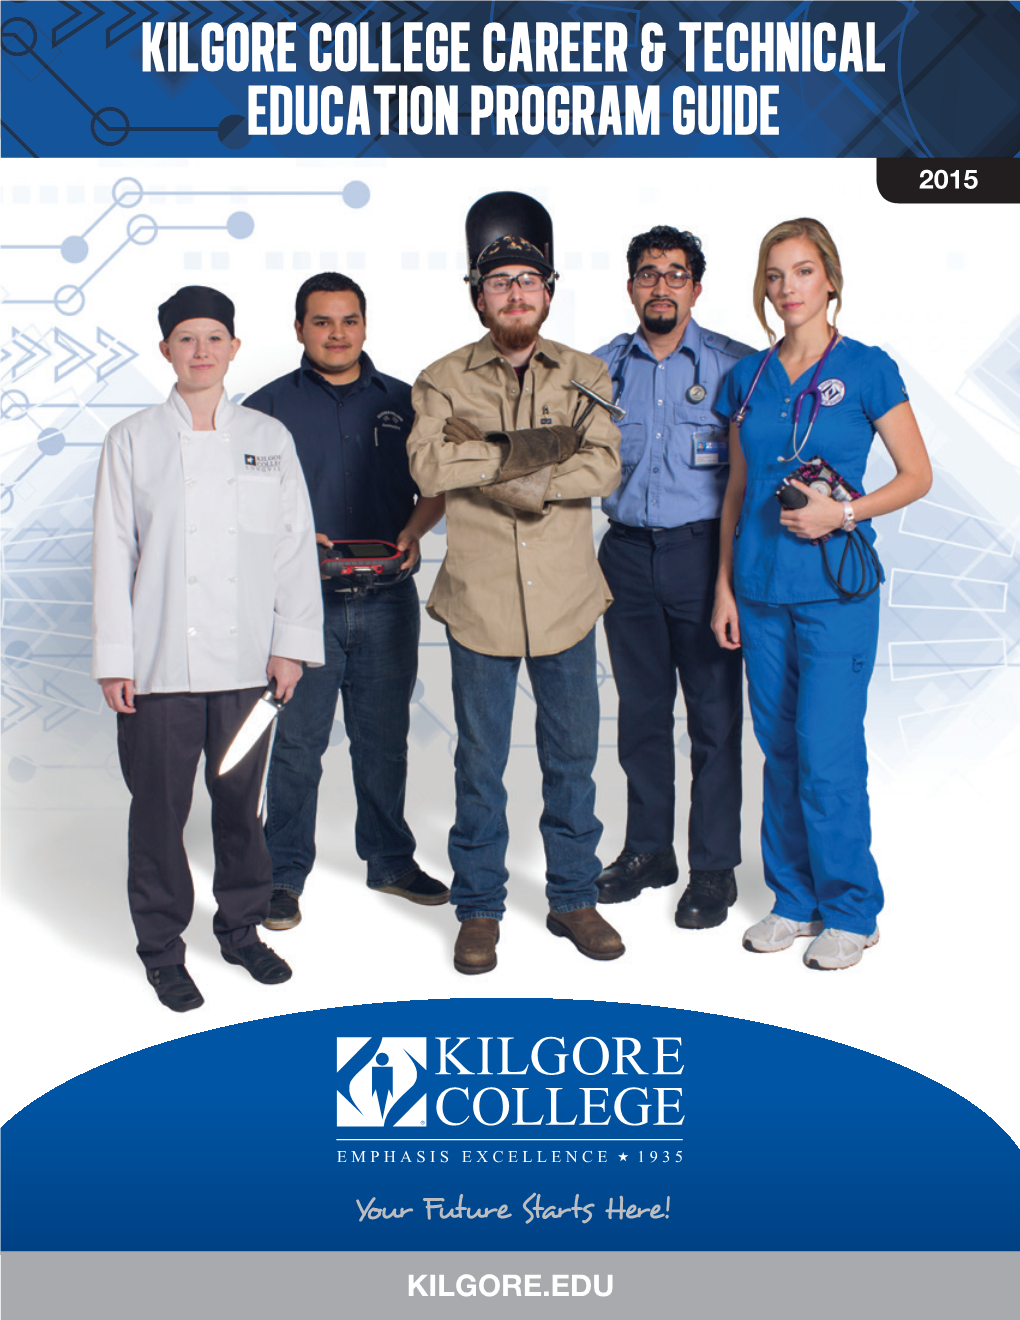 Kilgore College Career & Technical Education Program Guide